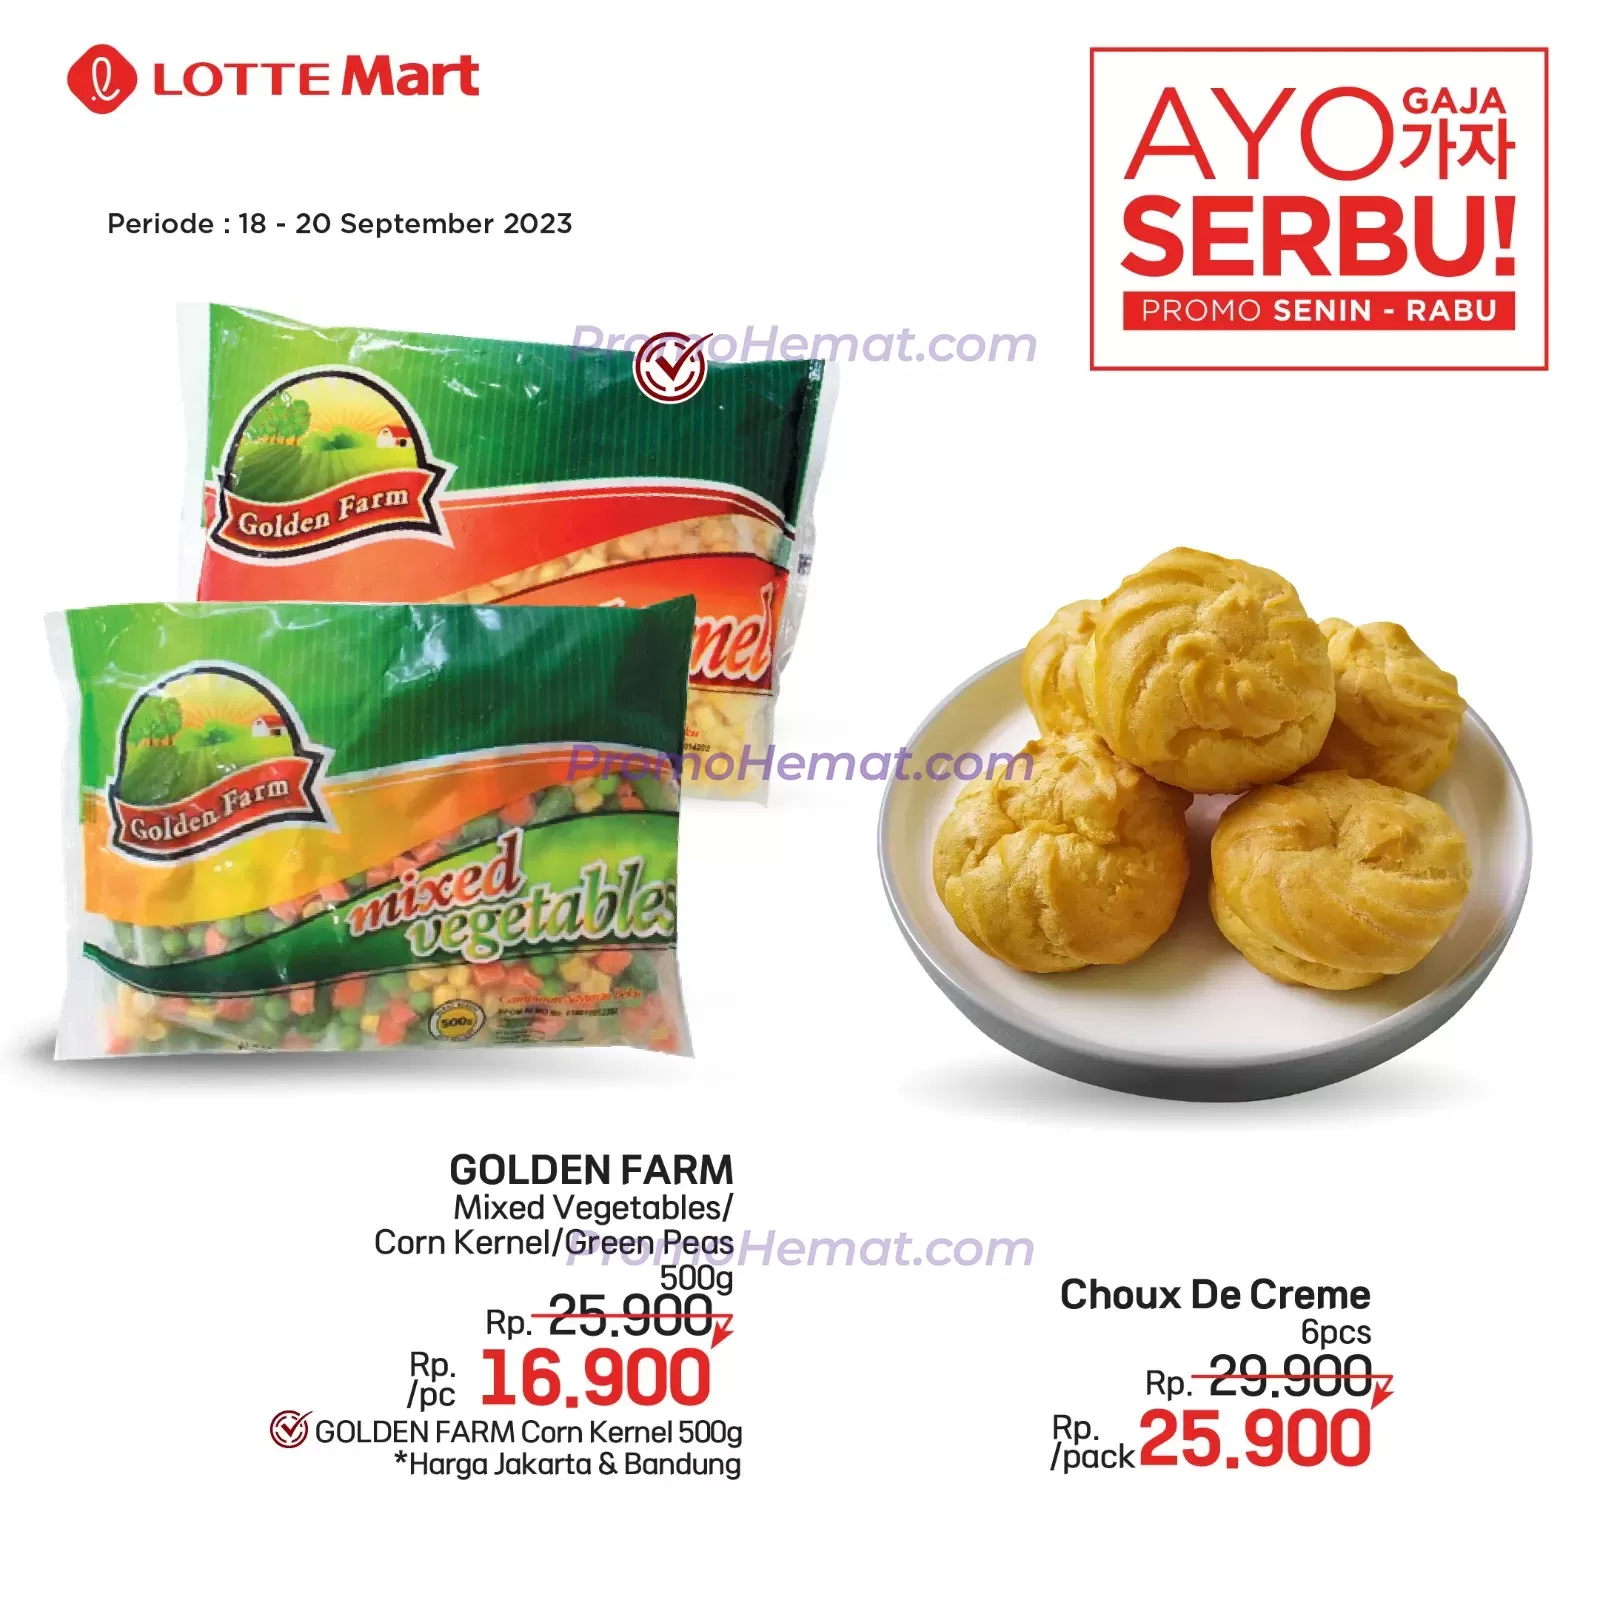 Promo Serbu Lotte Mart Periode 18 - 20 September 2023 image_4